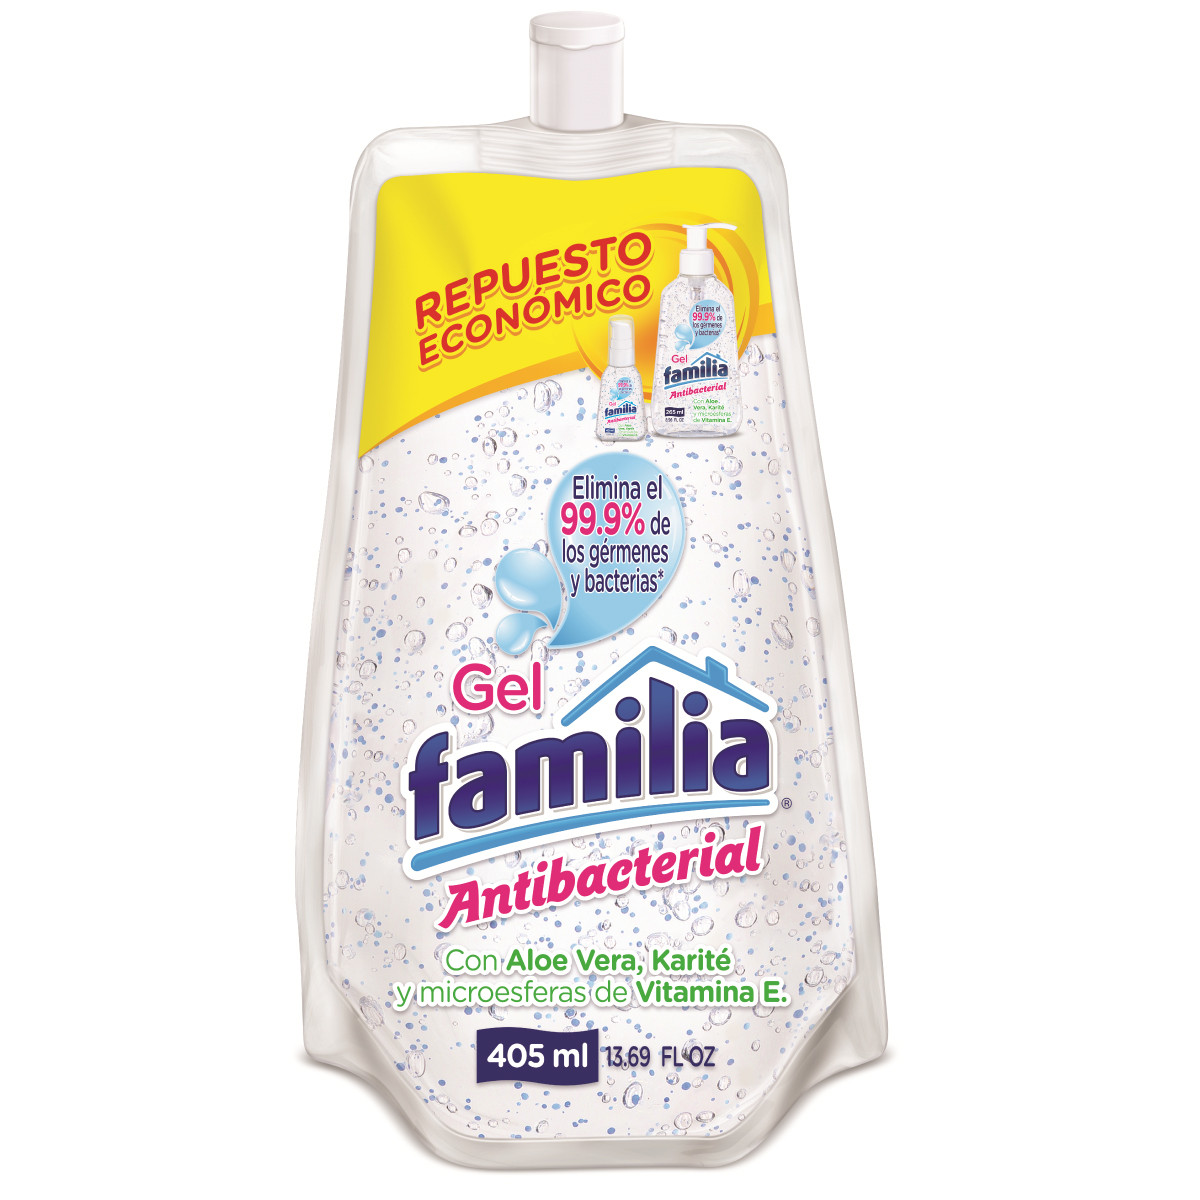 Imagen Gel Familia Antibacterial Repuesto X 405 ml 1